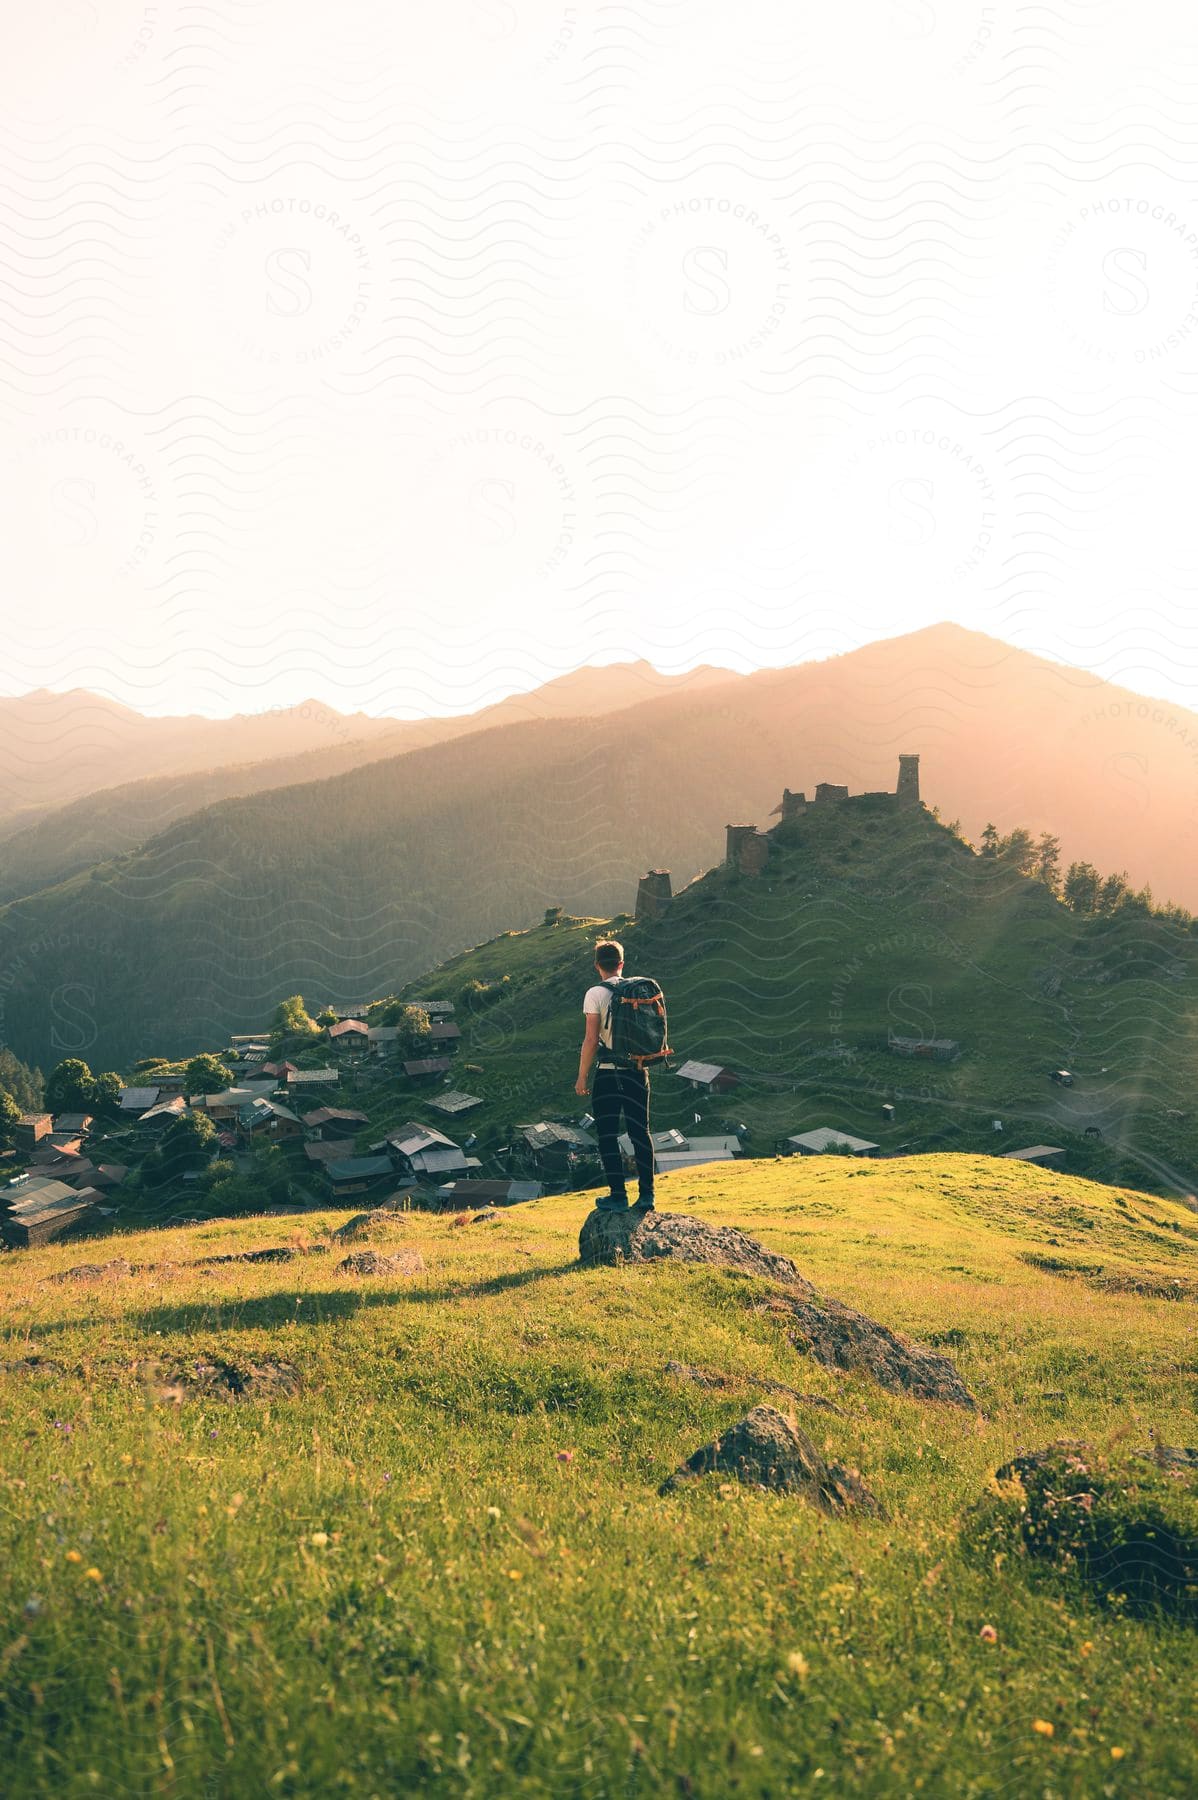 Backpacker standing on hillside overlooking rural town in georgia